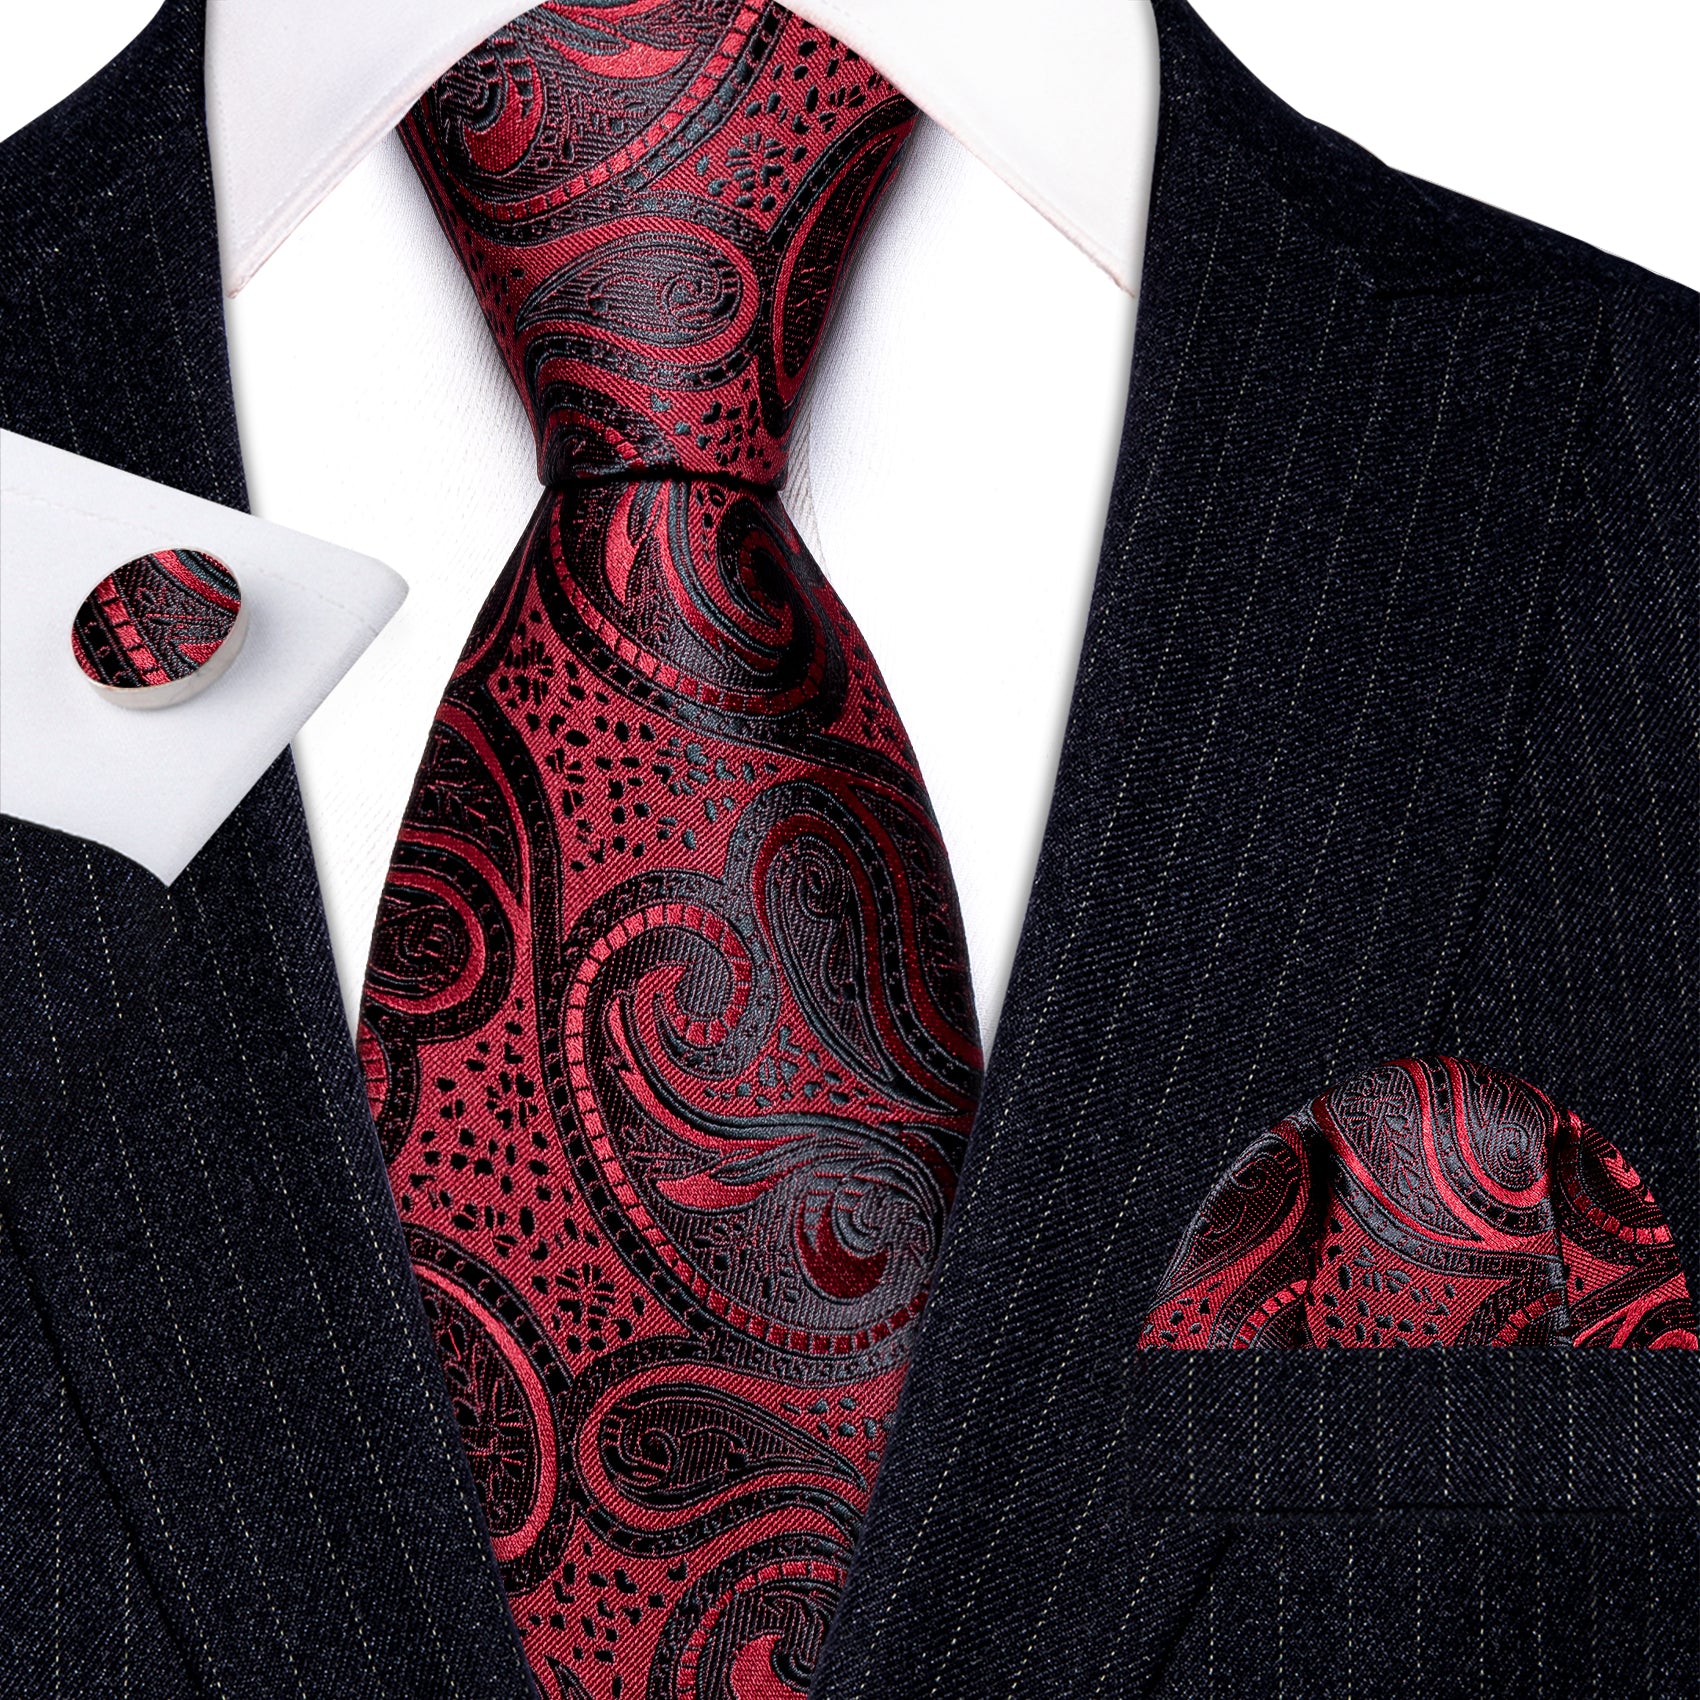 Bright Red Black Paisley Silk Tie Pocket Square Cufflinks Set